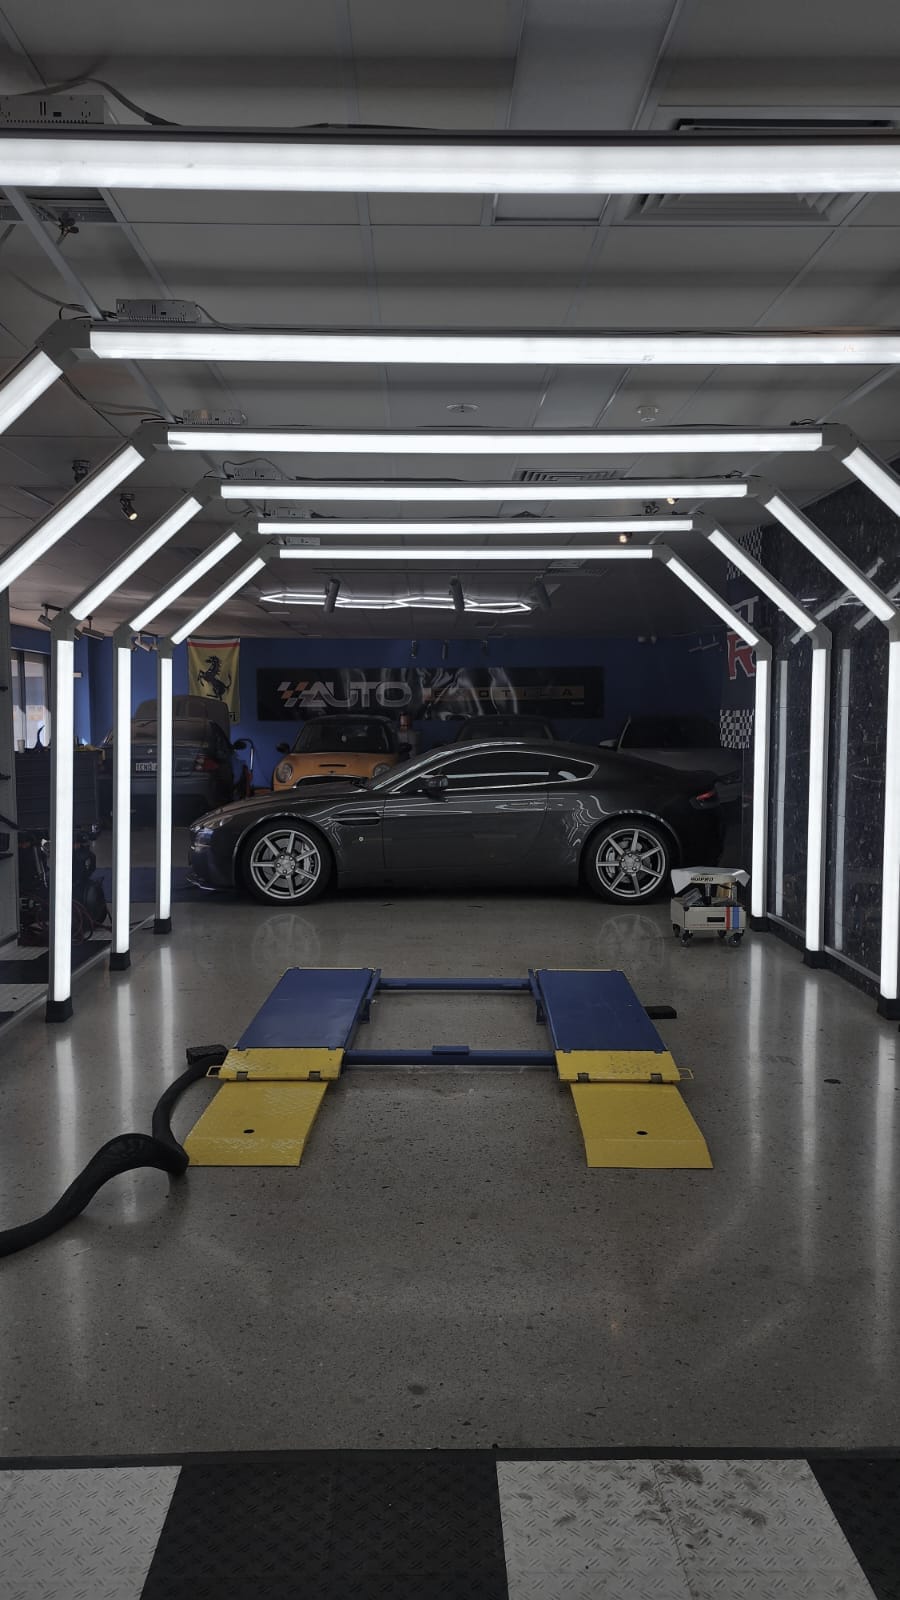 Showroom / Garage modular LED Grid  Maxi Lighting Tunnel